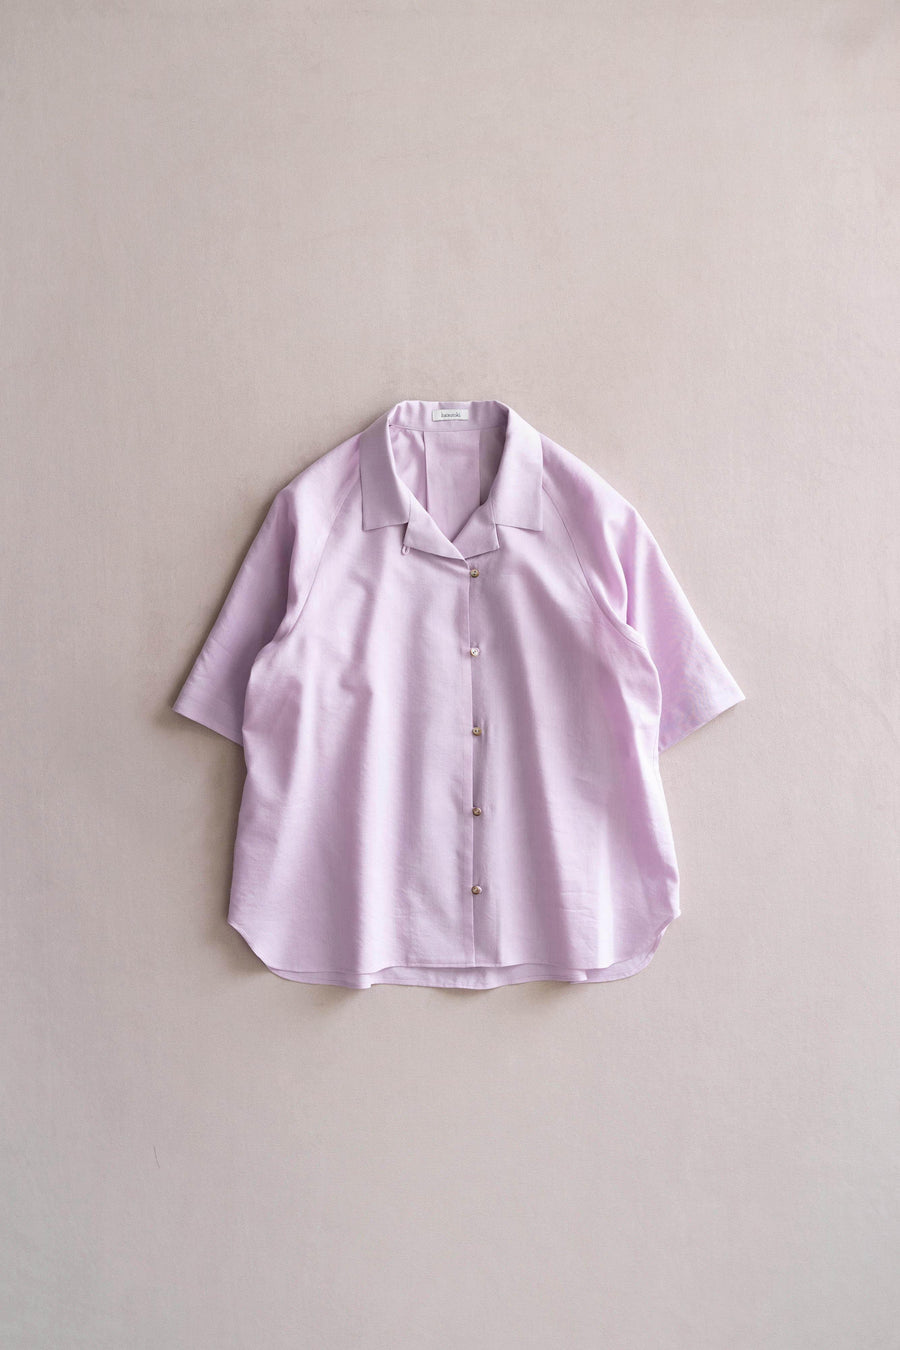 incense オープンカラーシャツ(ラベンダー) - hatsutoki ONLINE STORE